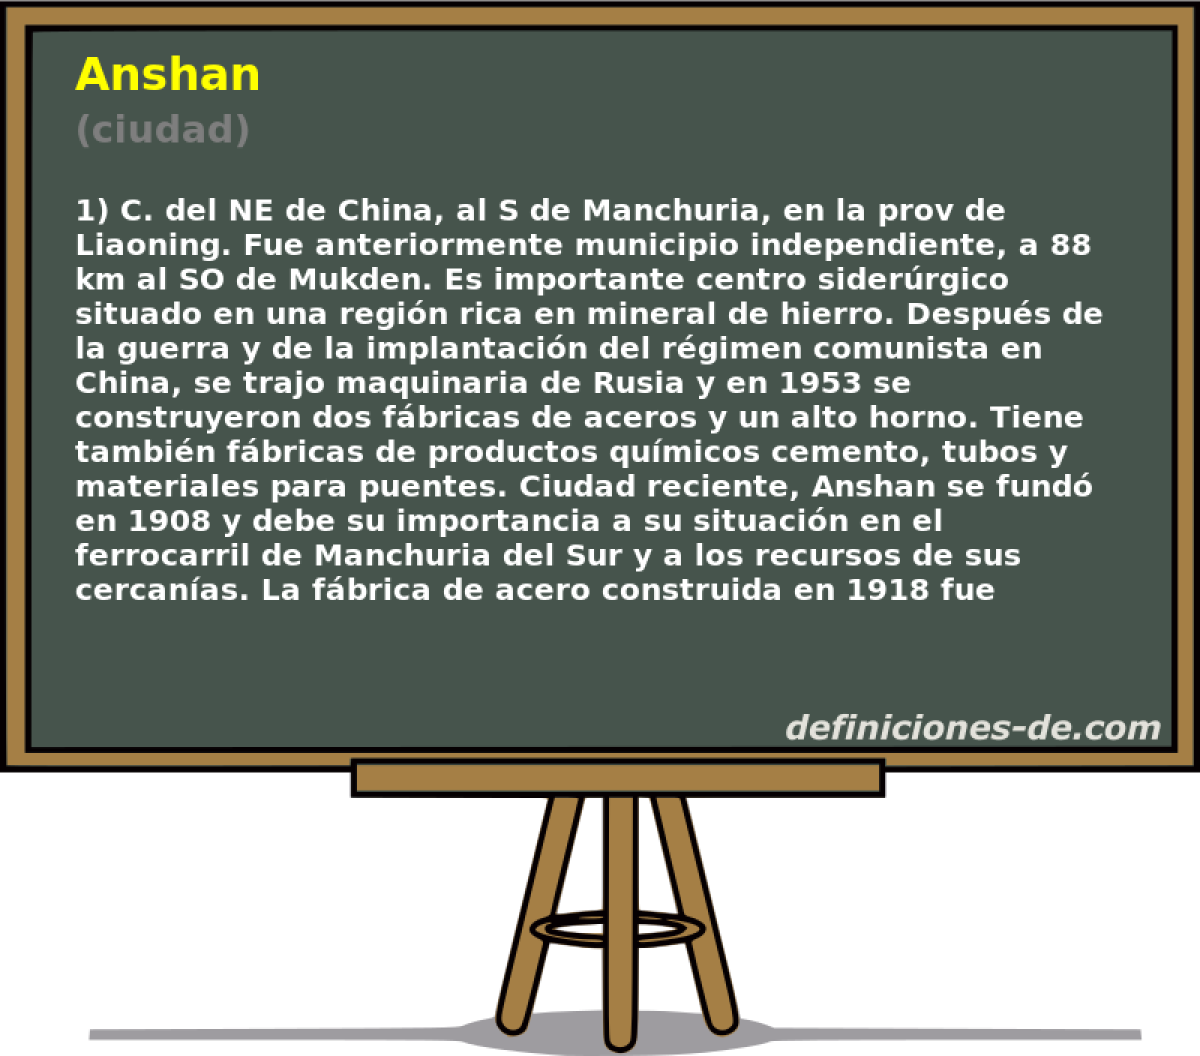 Anshan (ciudad)